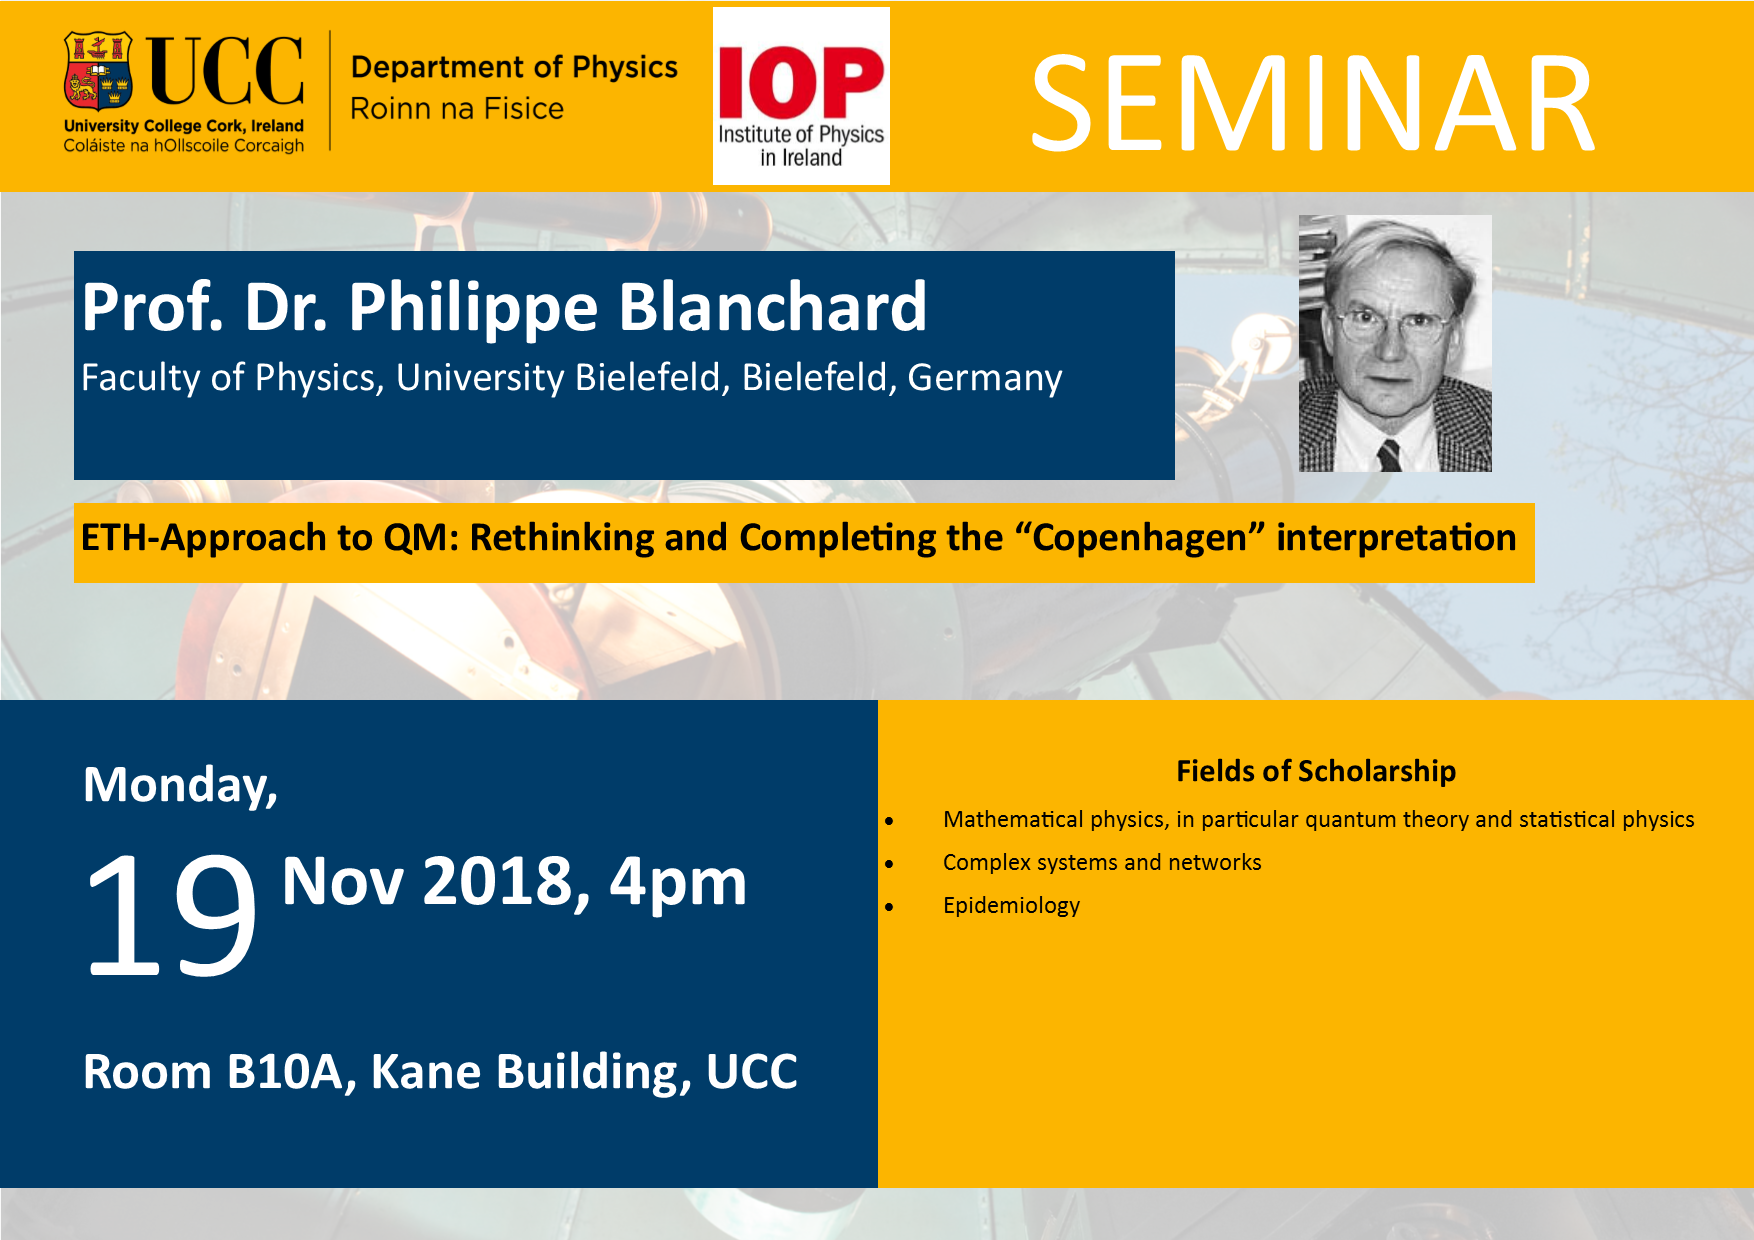 19 Nov 2018 Philippe Blanchard Seminar Poster